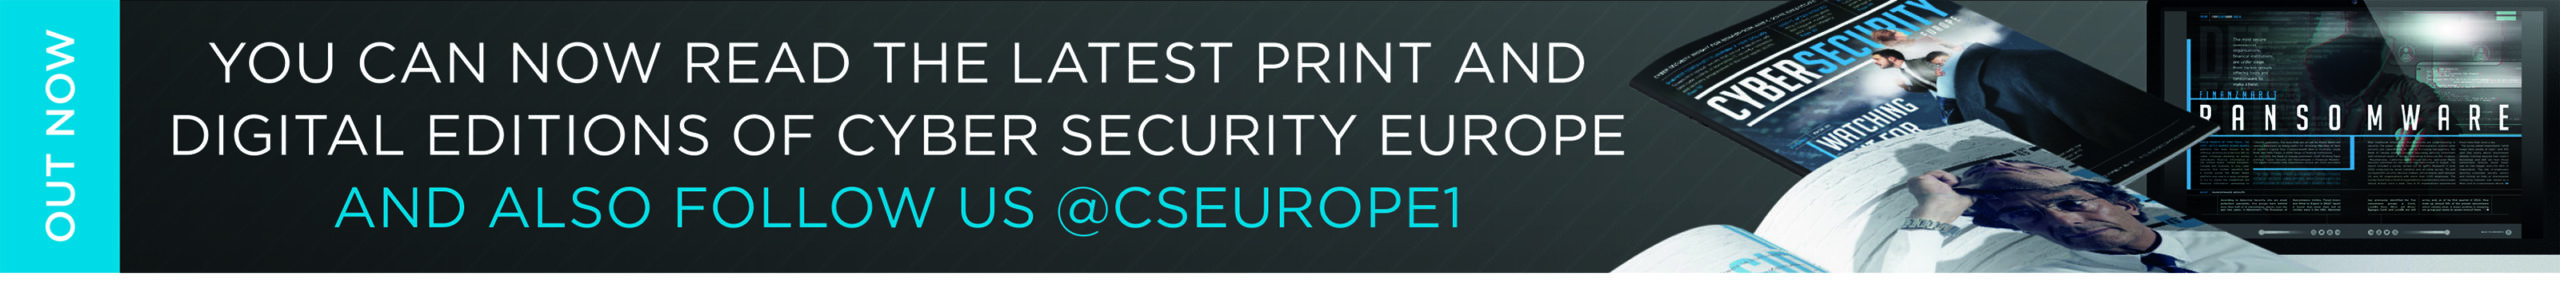 Cyber Security Europe Magazine